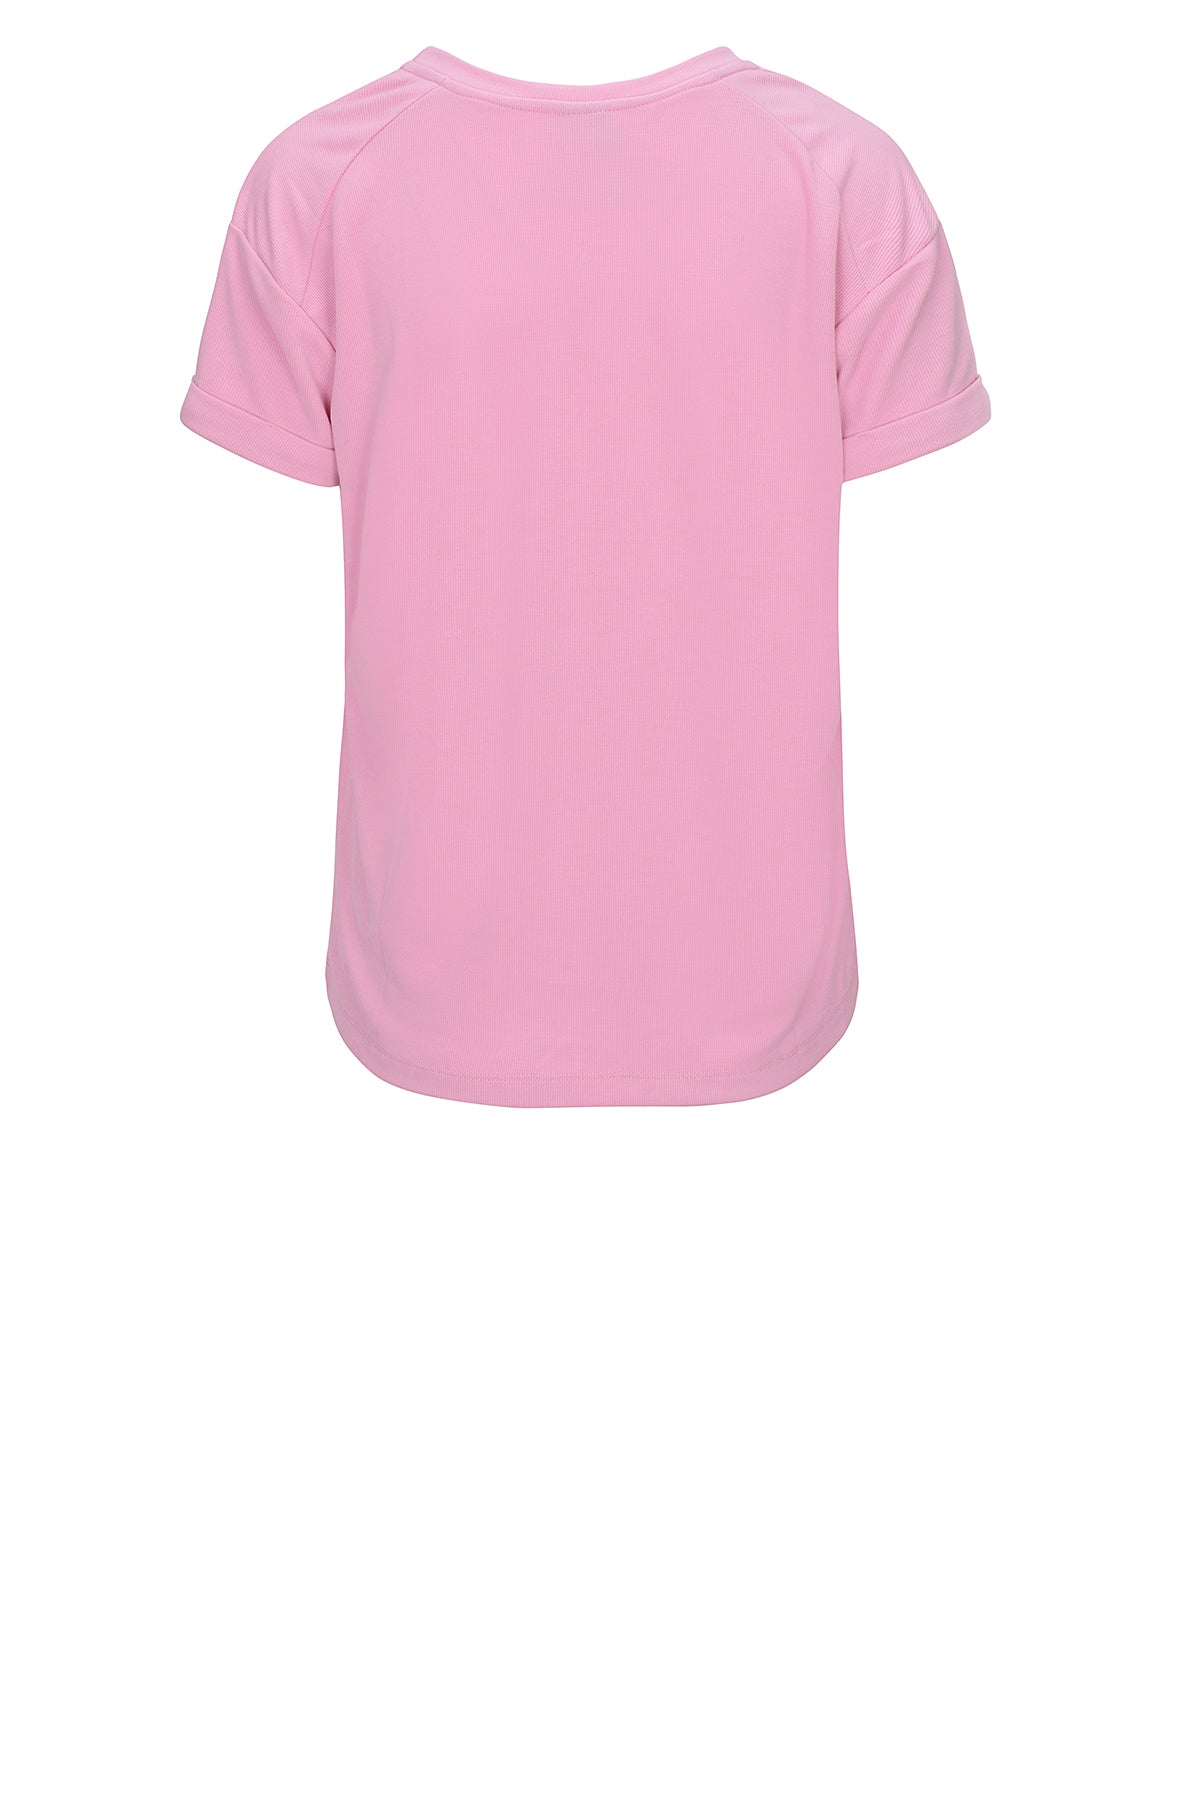 LUXZUZ // ONE TWO Karin T-Shirt 302 Rose Smoke